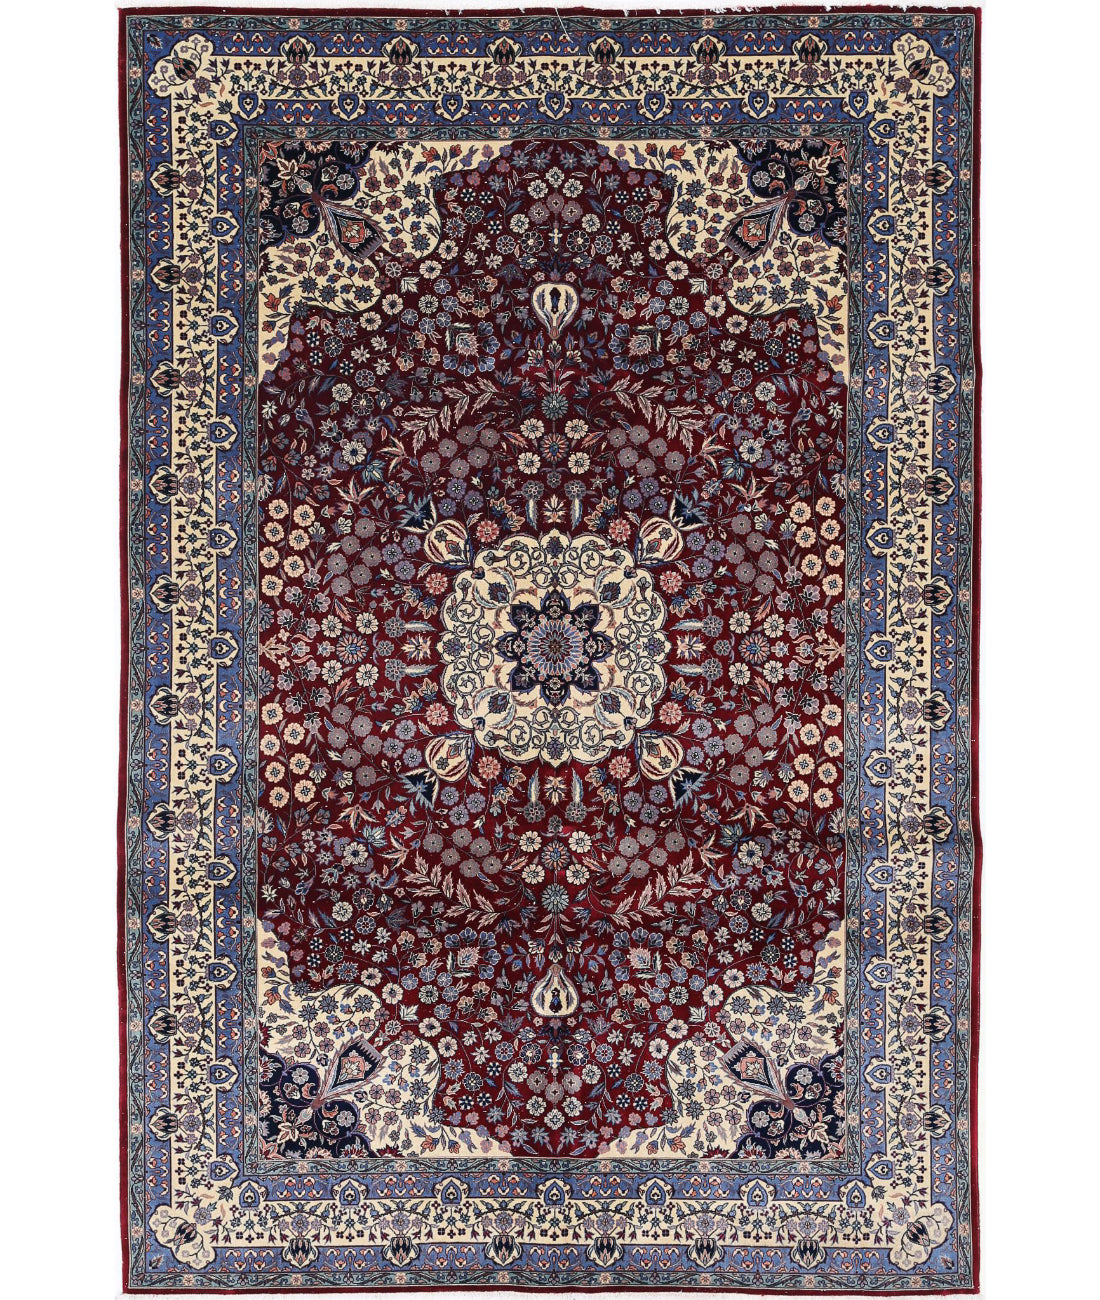 Heritage-hand-knotted-pak-persian-fine-wool-rug-5025213.jpg